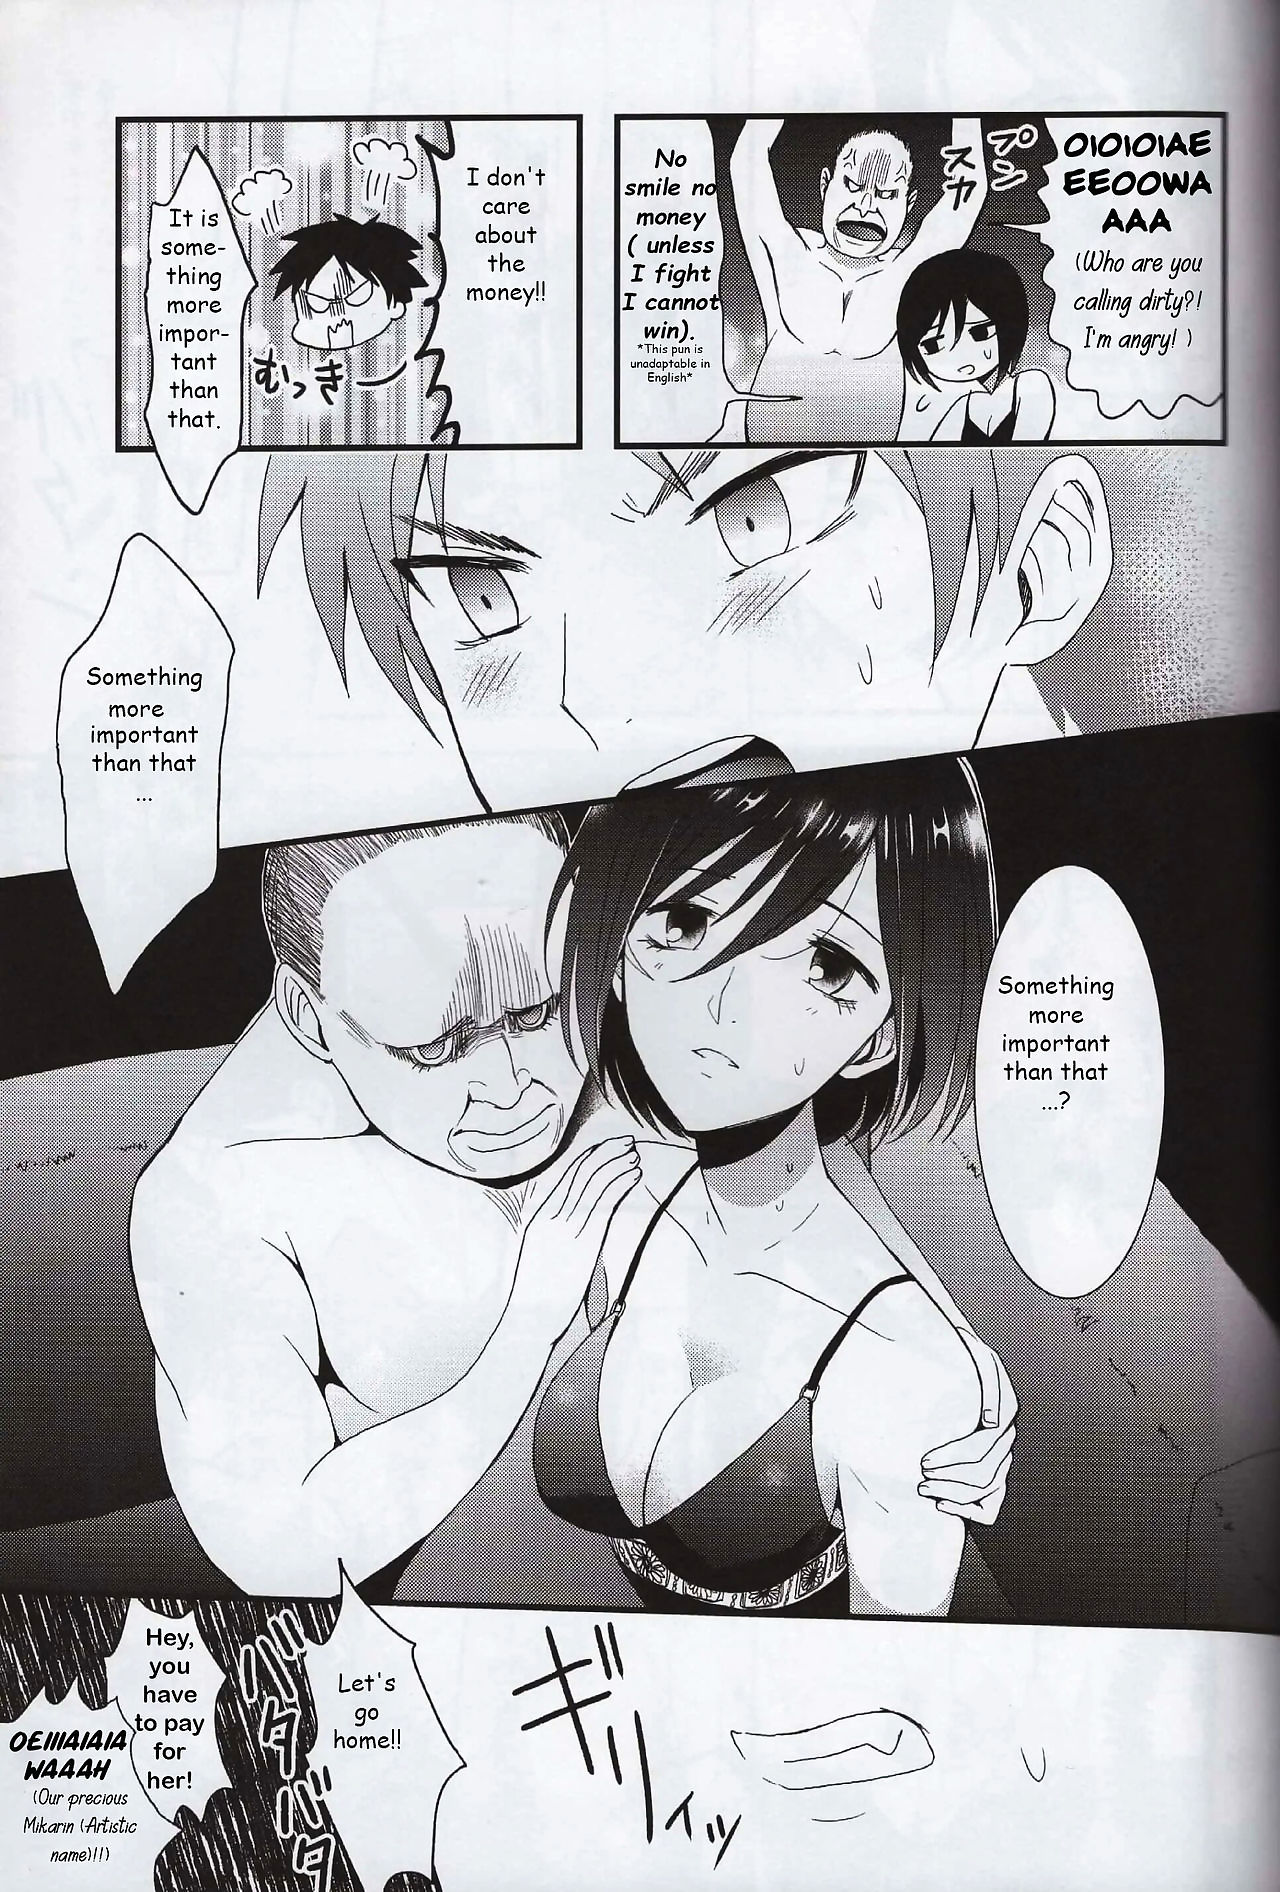 Sex deutsch manga Mangapornos anime